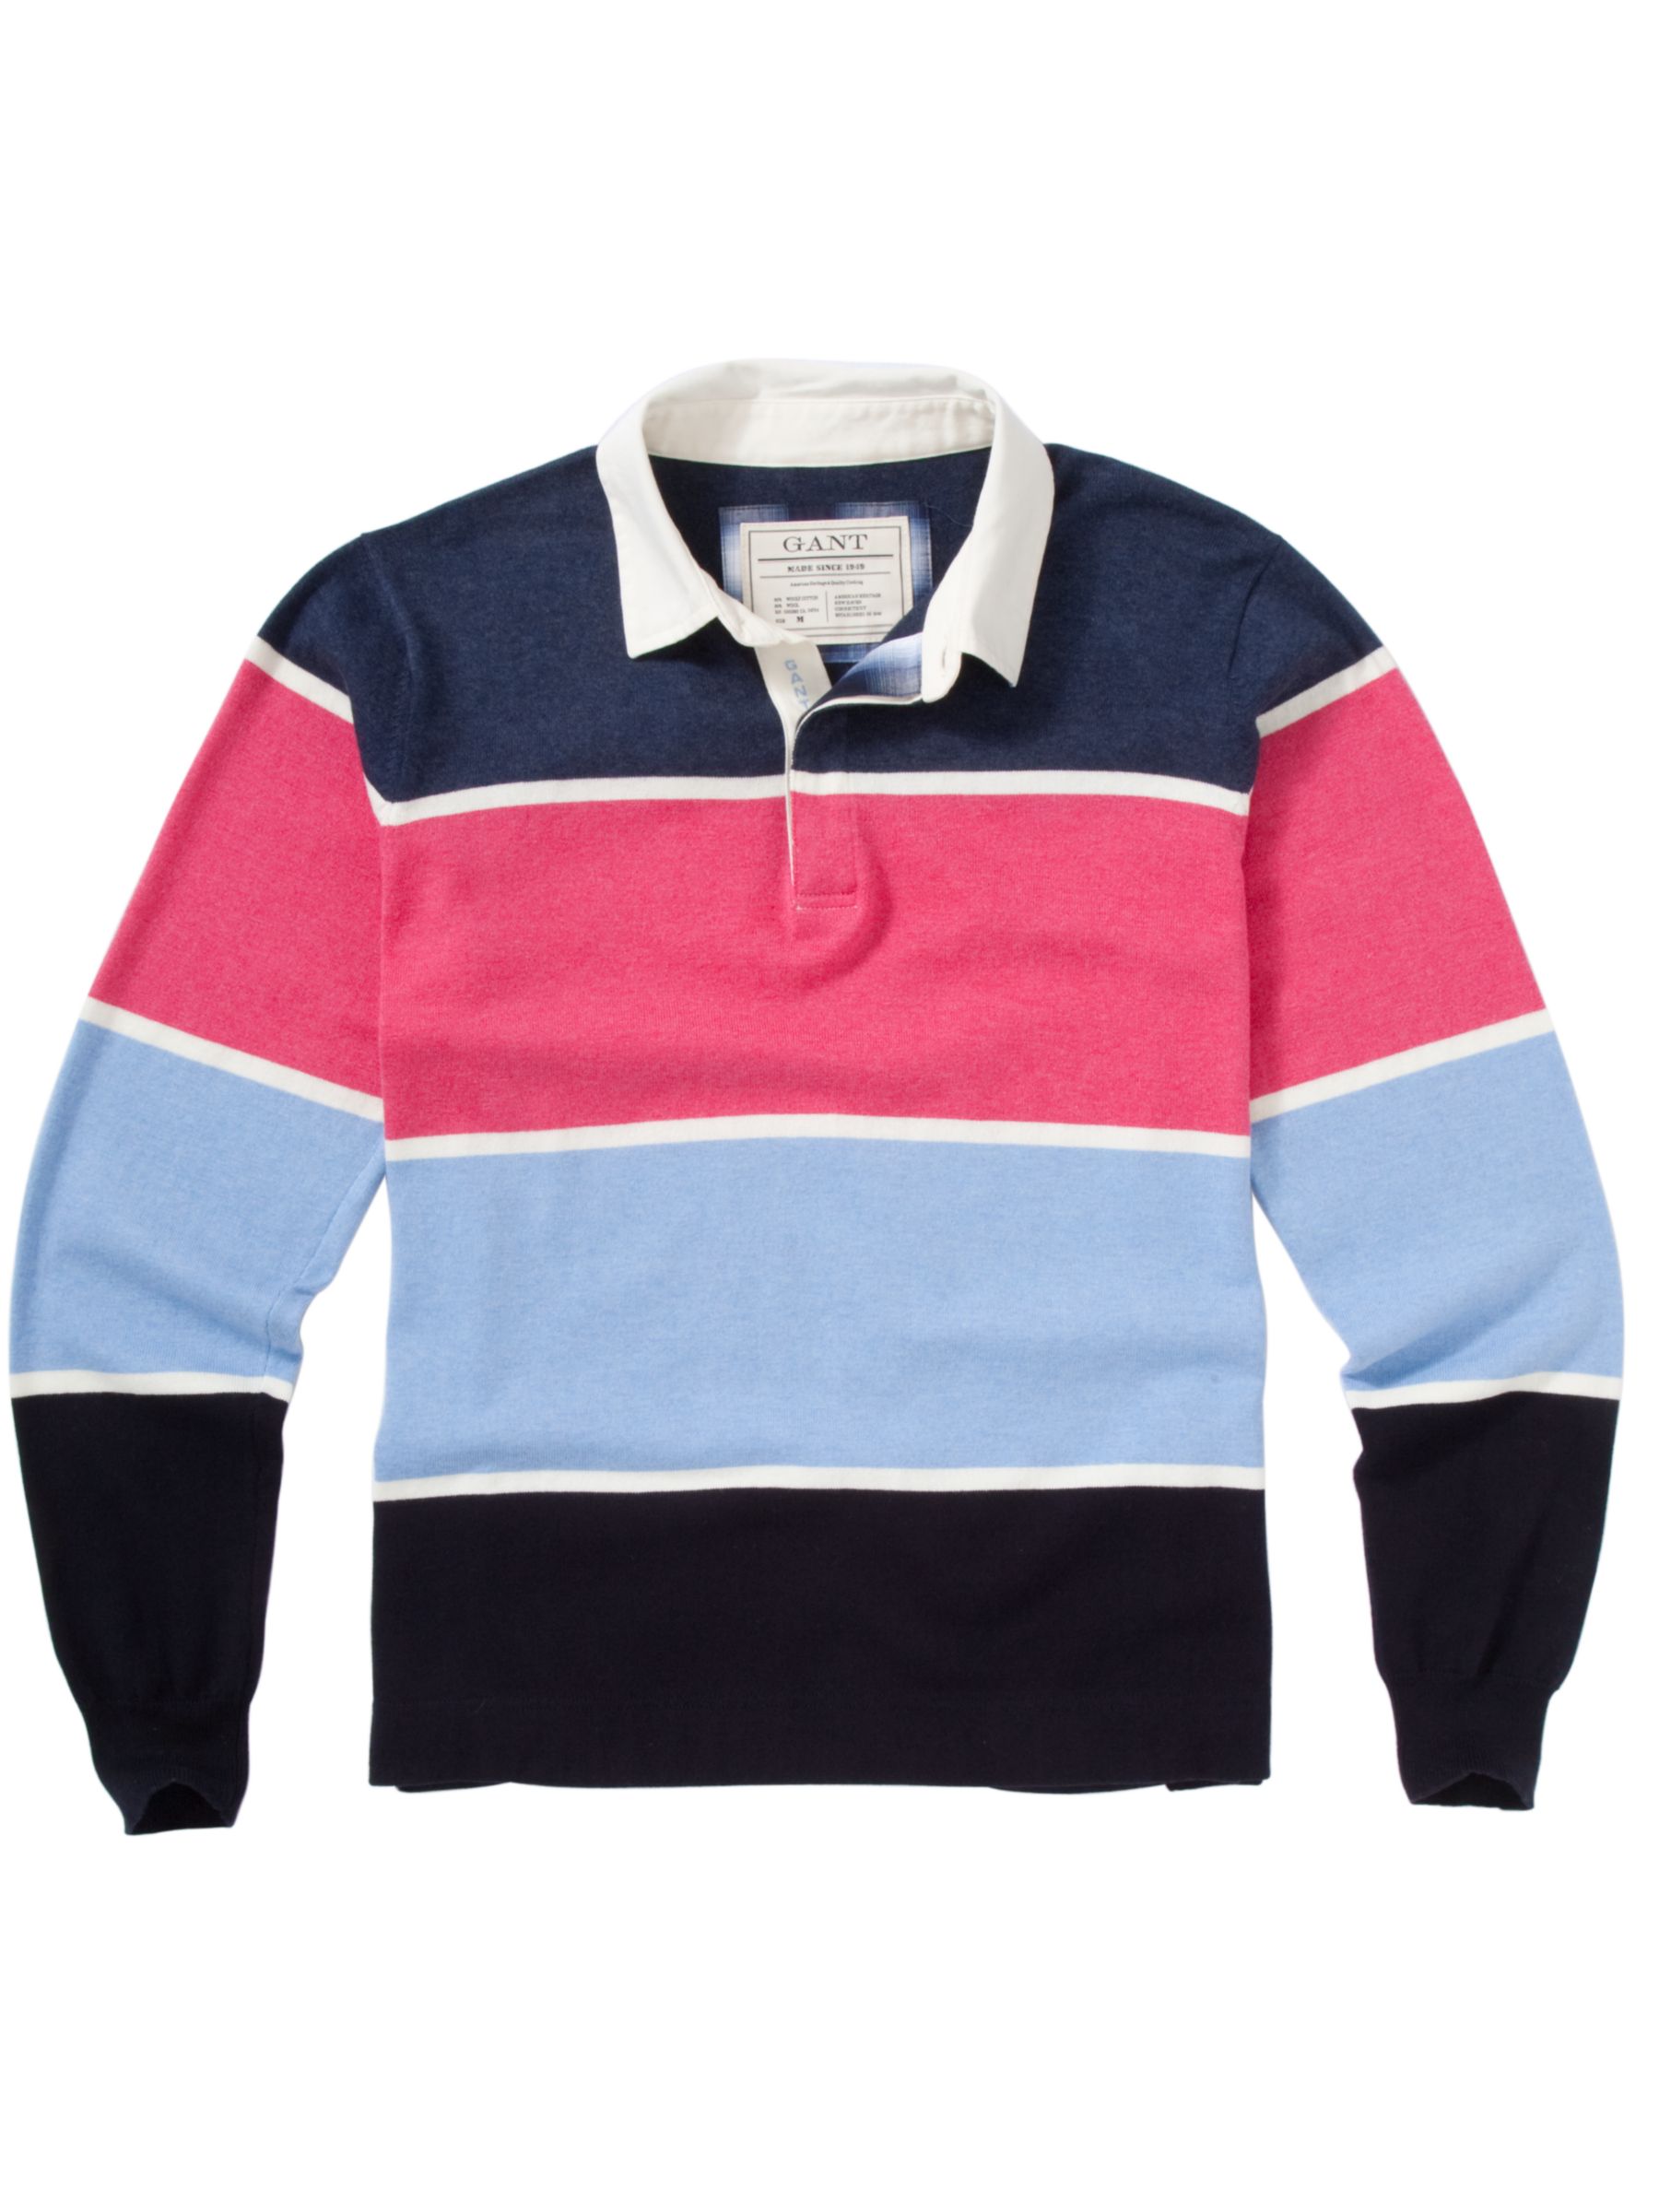 Gant Cotton/Wool Block Stripe Rugby Shirt,